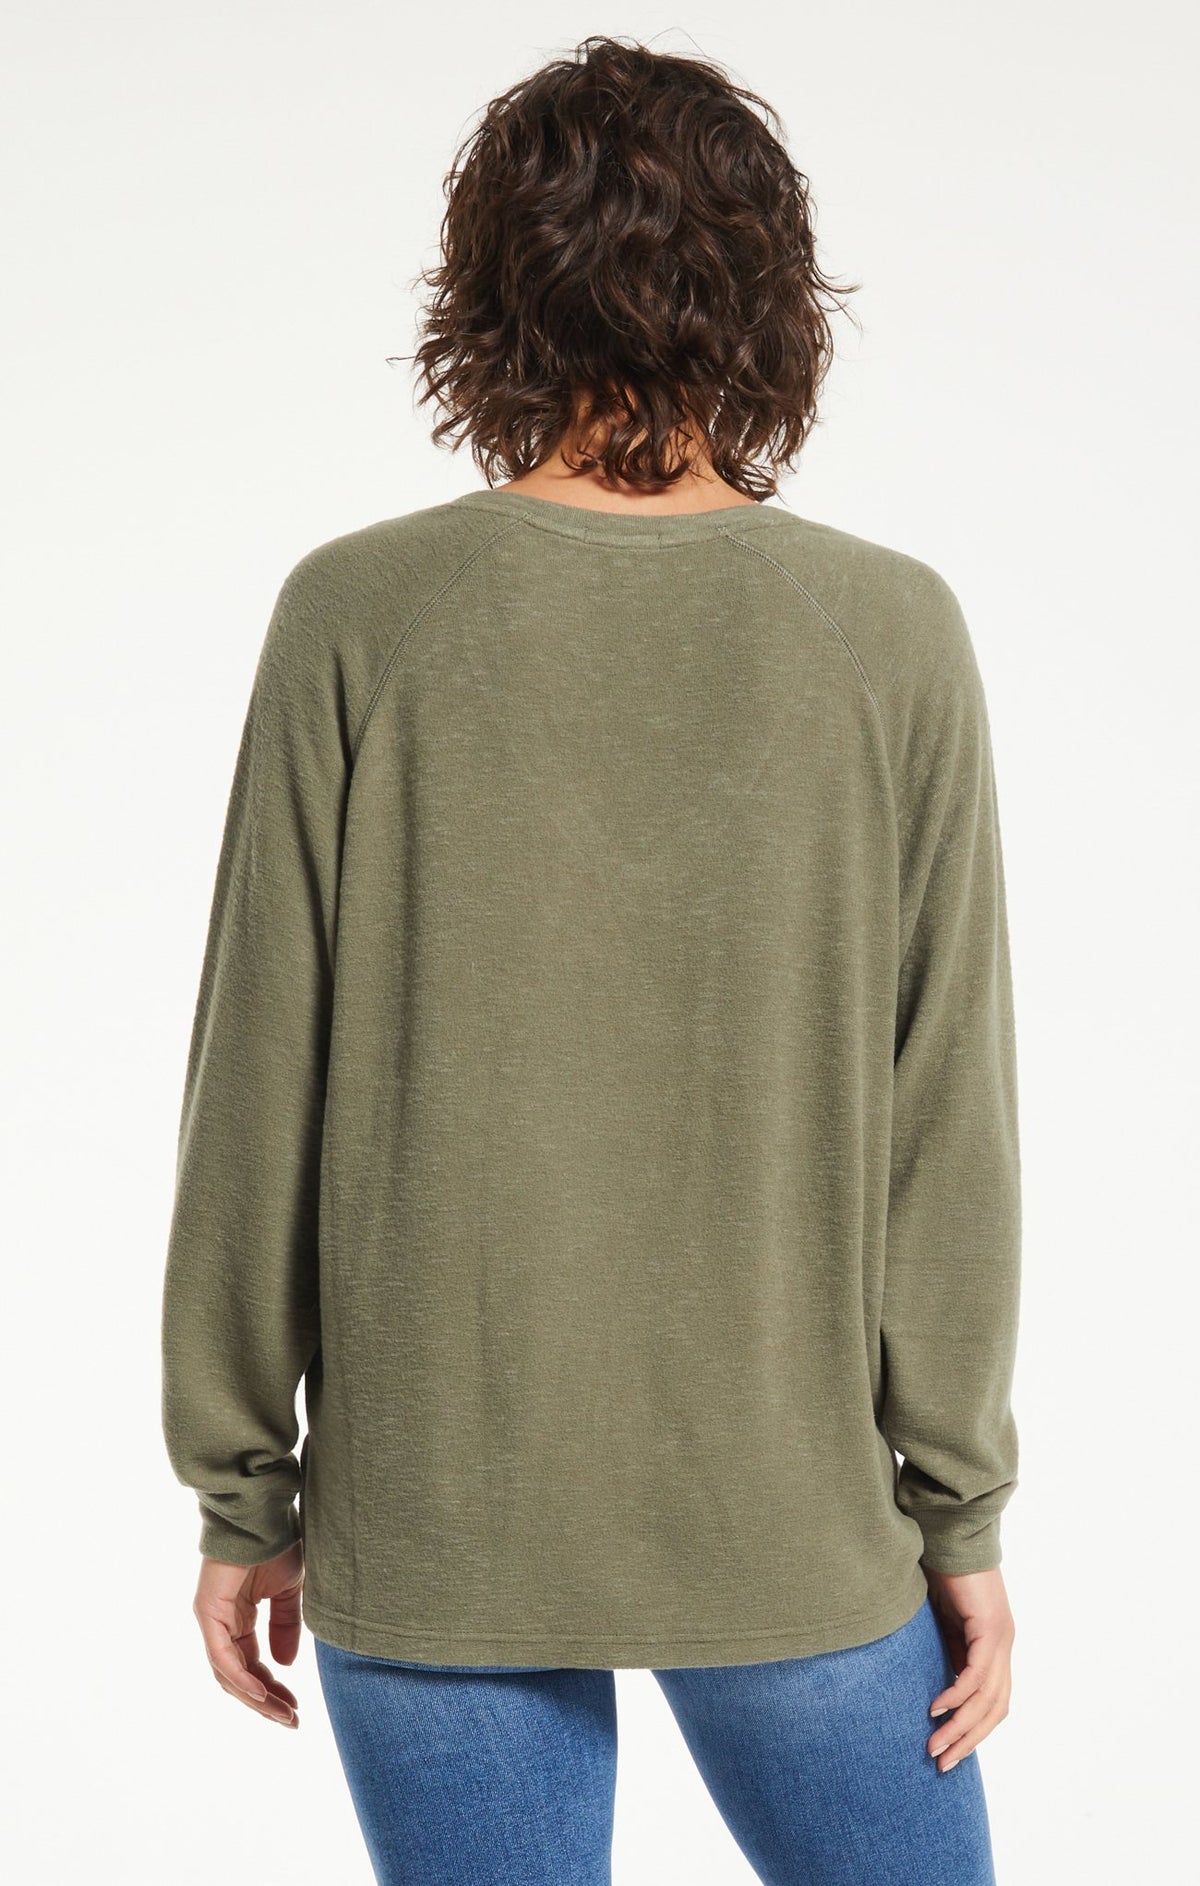 Lyndell Brushed Slub Knit Sweater Top | Charcoal, Sandstone, Dusty Olive